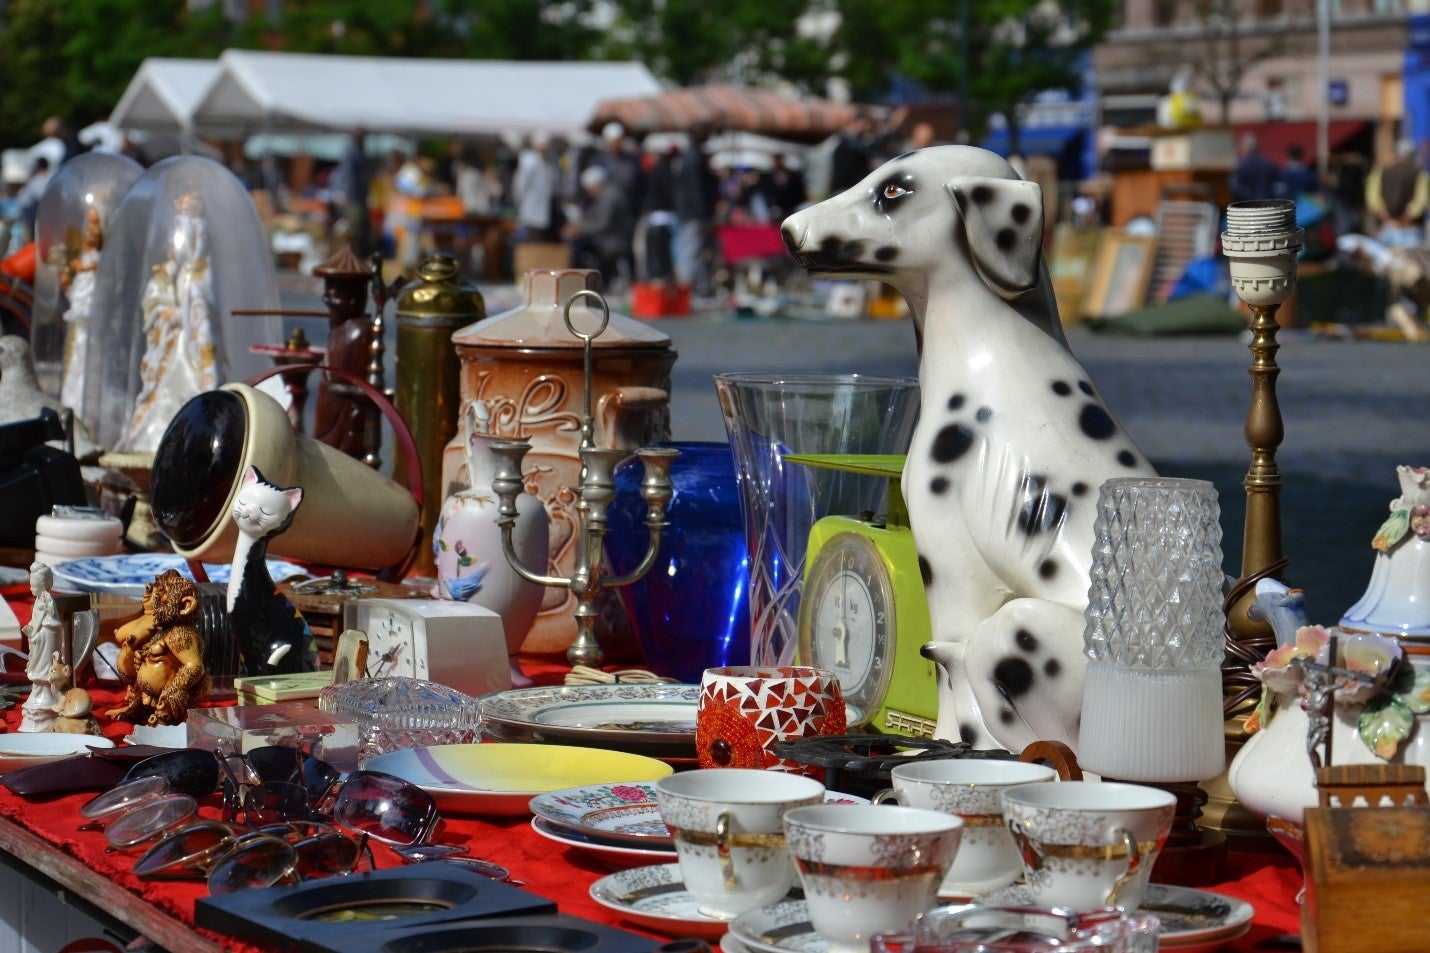 Antique items at a market